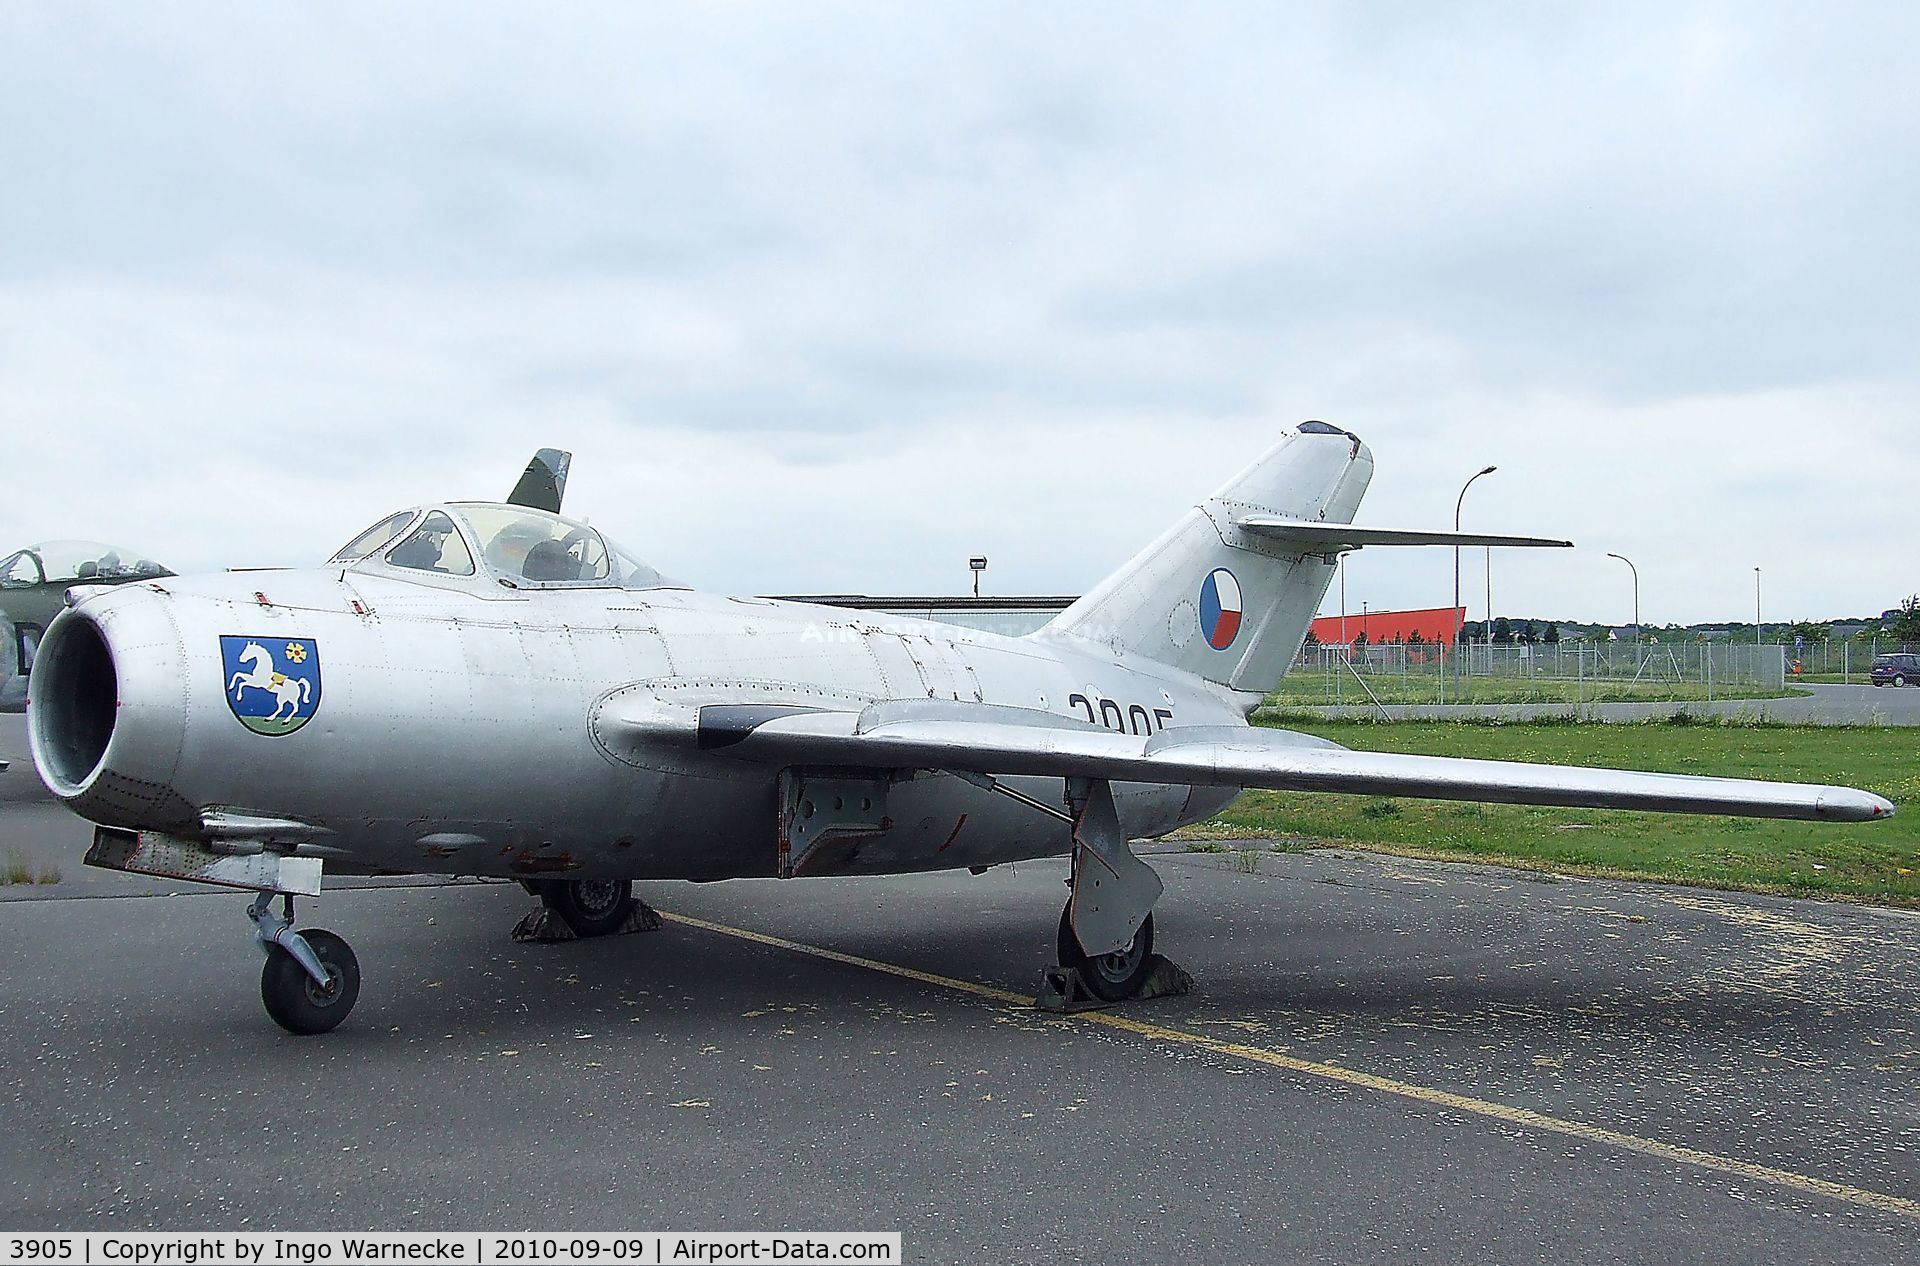 3905, Aero S-102 (MiG-15bis) C/N 623905, Aero S-102 (MiG-15bis) FAGOT at the Luftwaffenmuseum, Berlin-Gatow